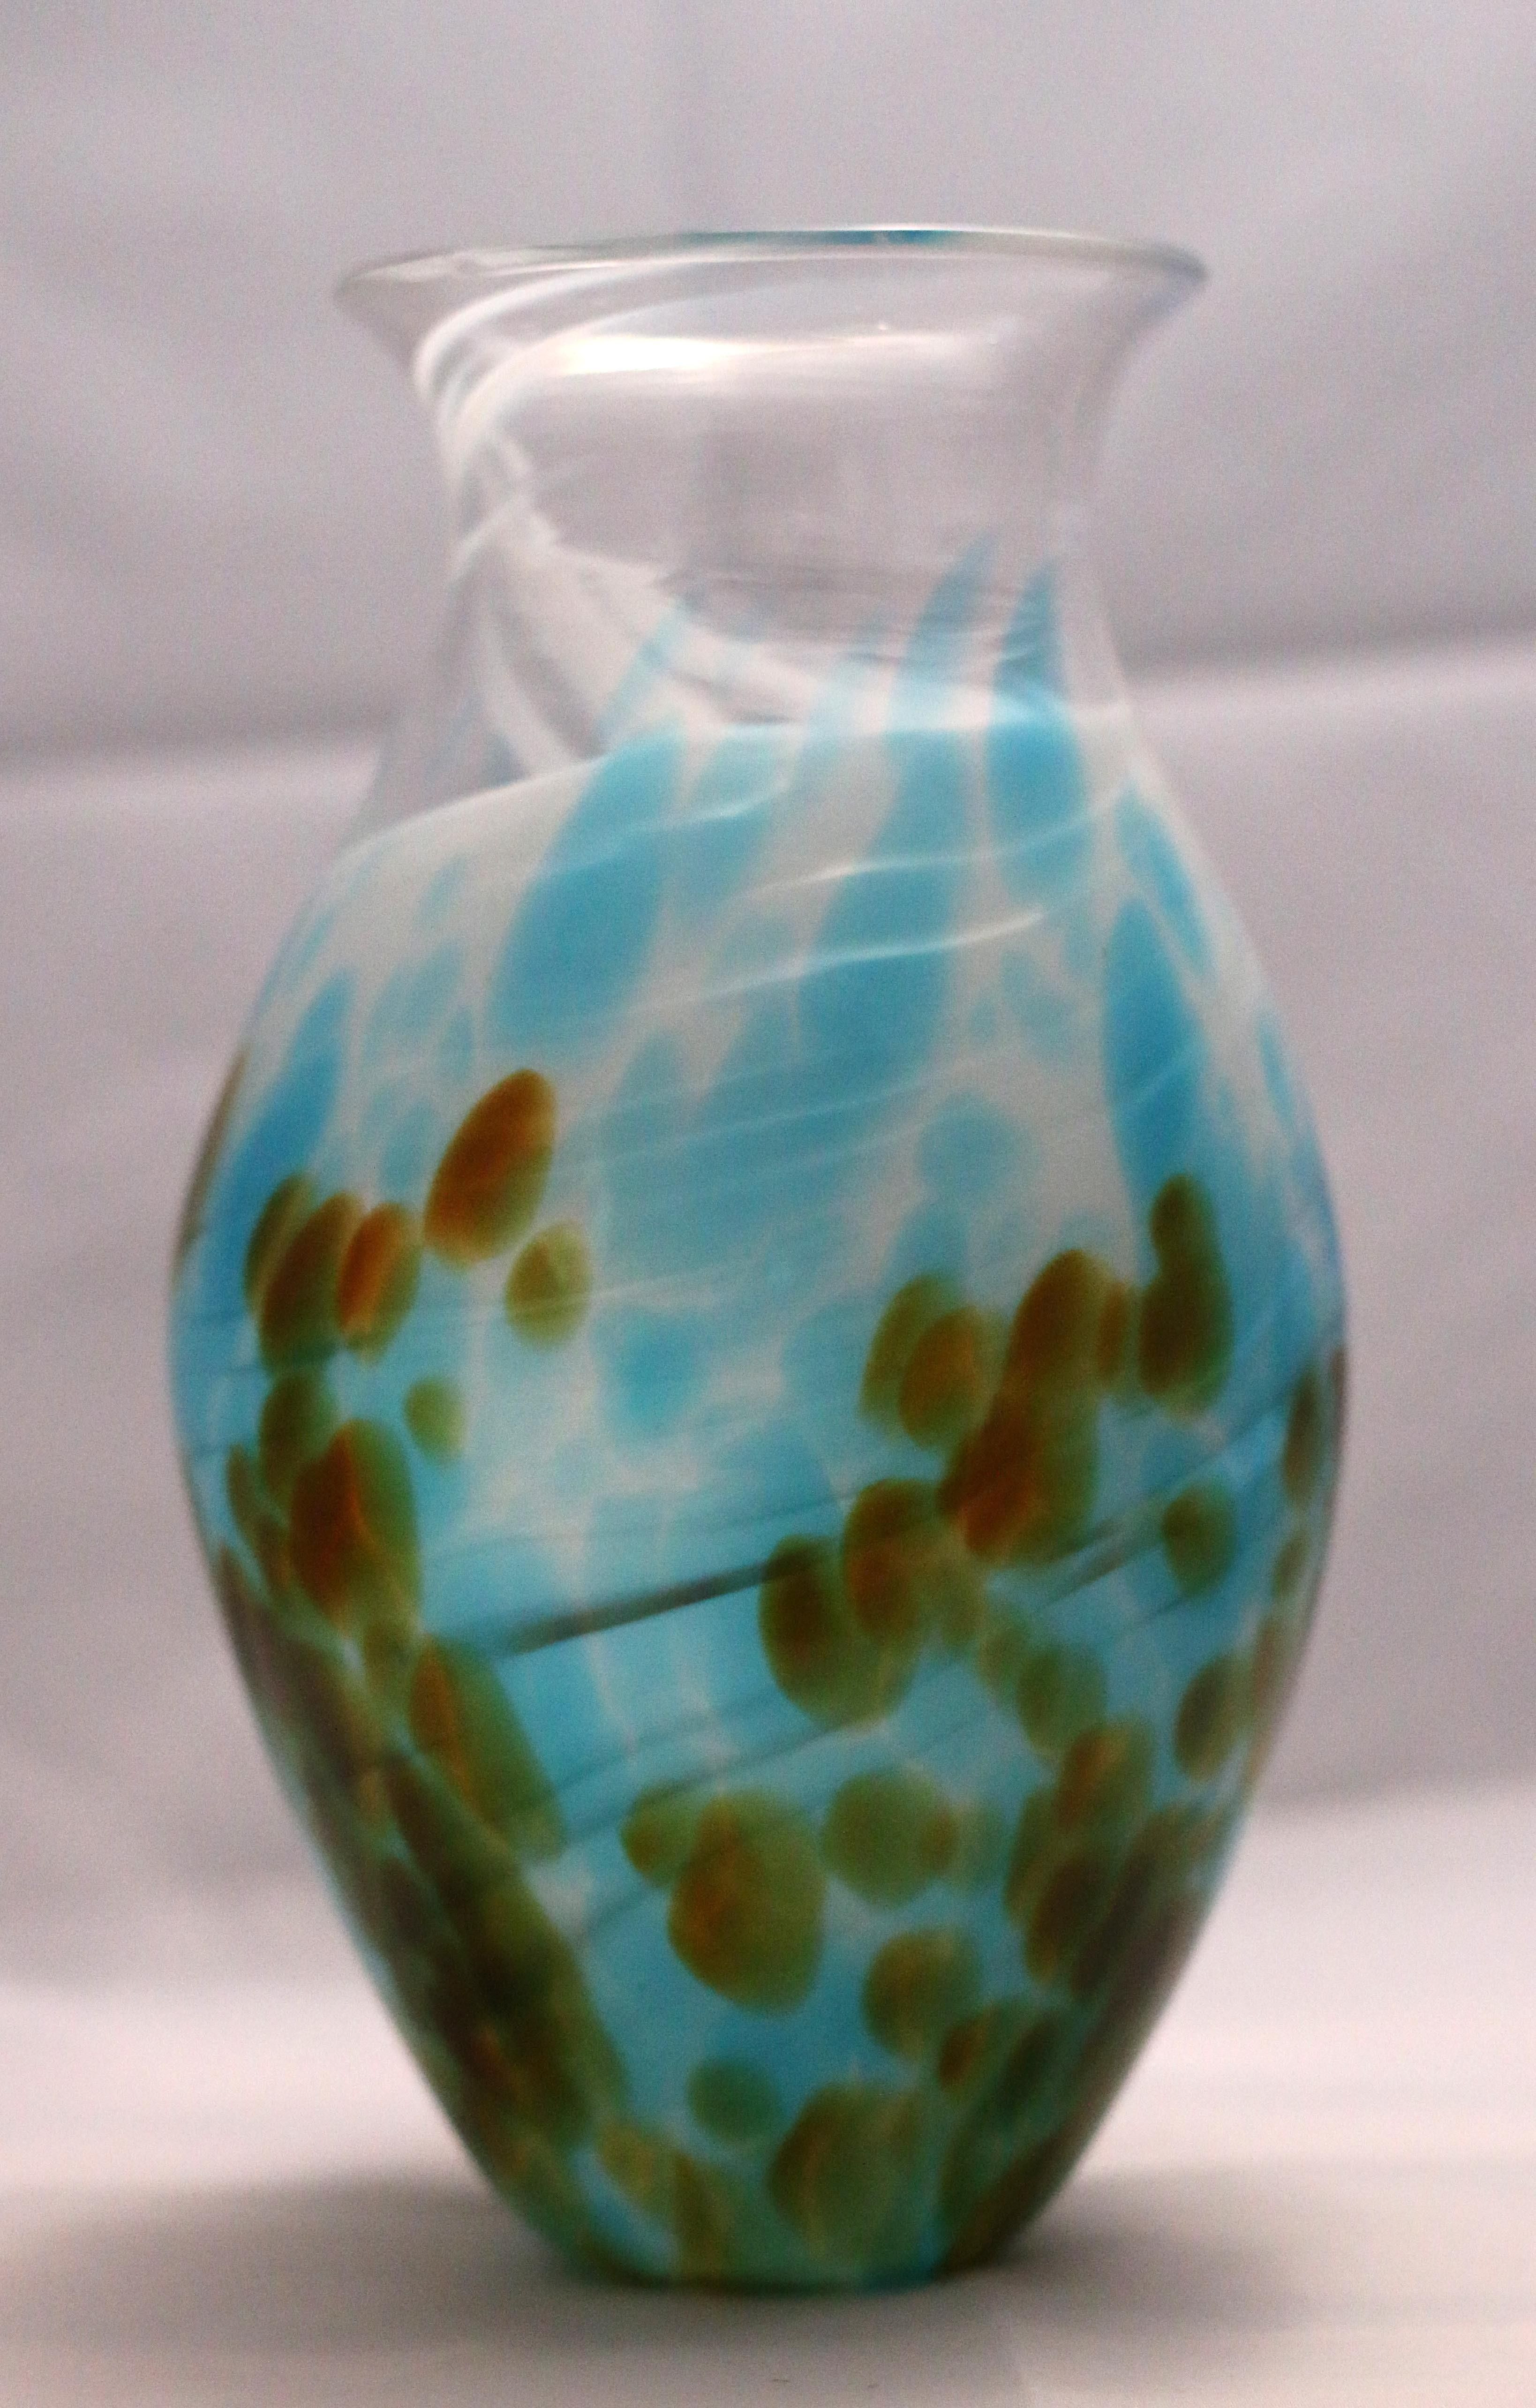 22 Lovable Black Glass Vase Vintage 2022 free download black glass vase vintage of 22 hobnail glass vase the weekly world with white milk glass vases bulk glass designs